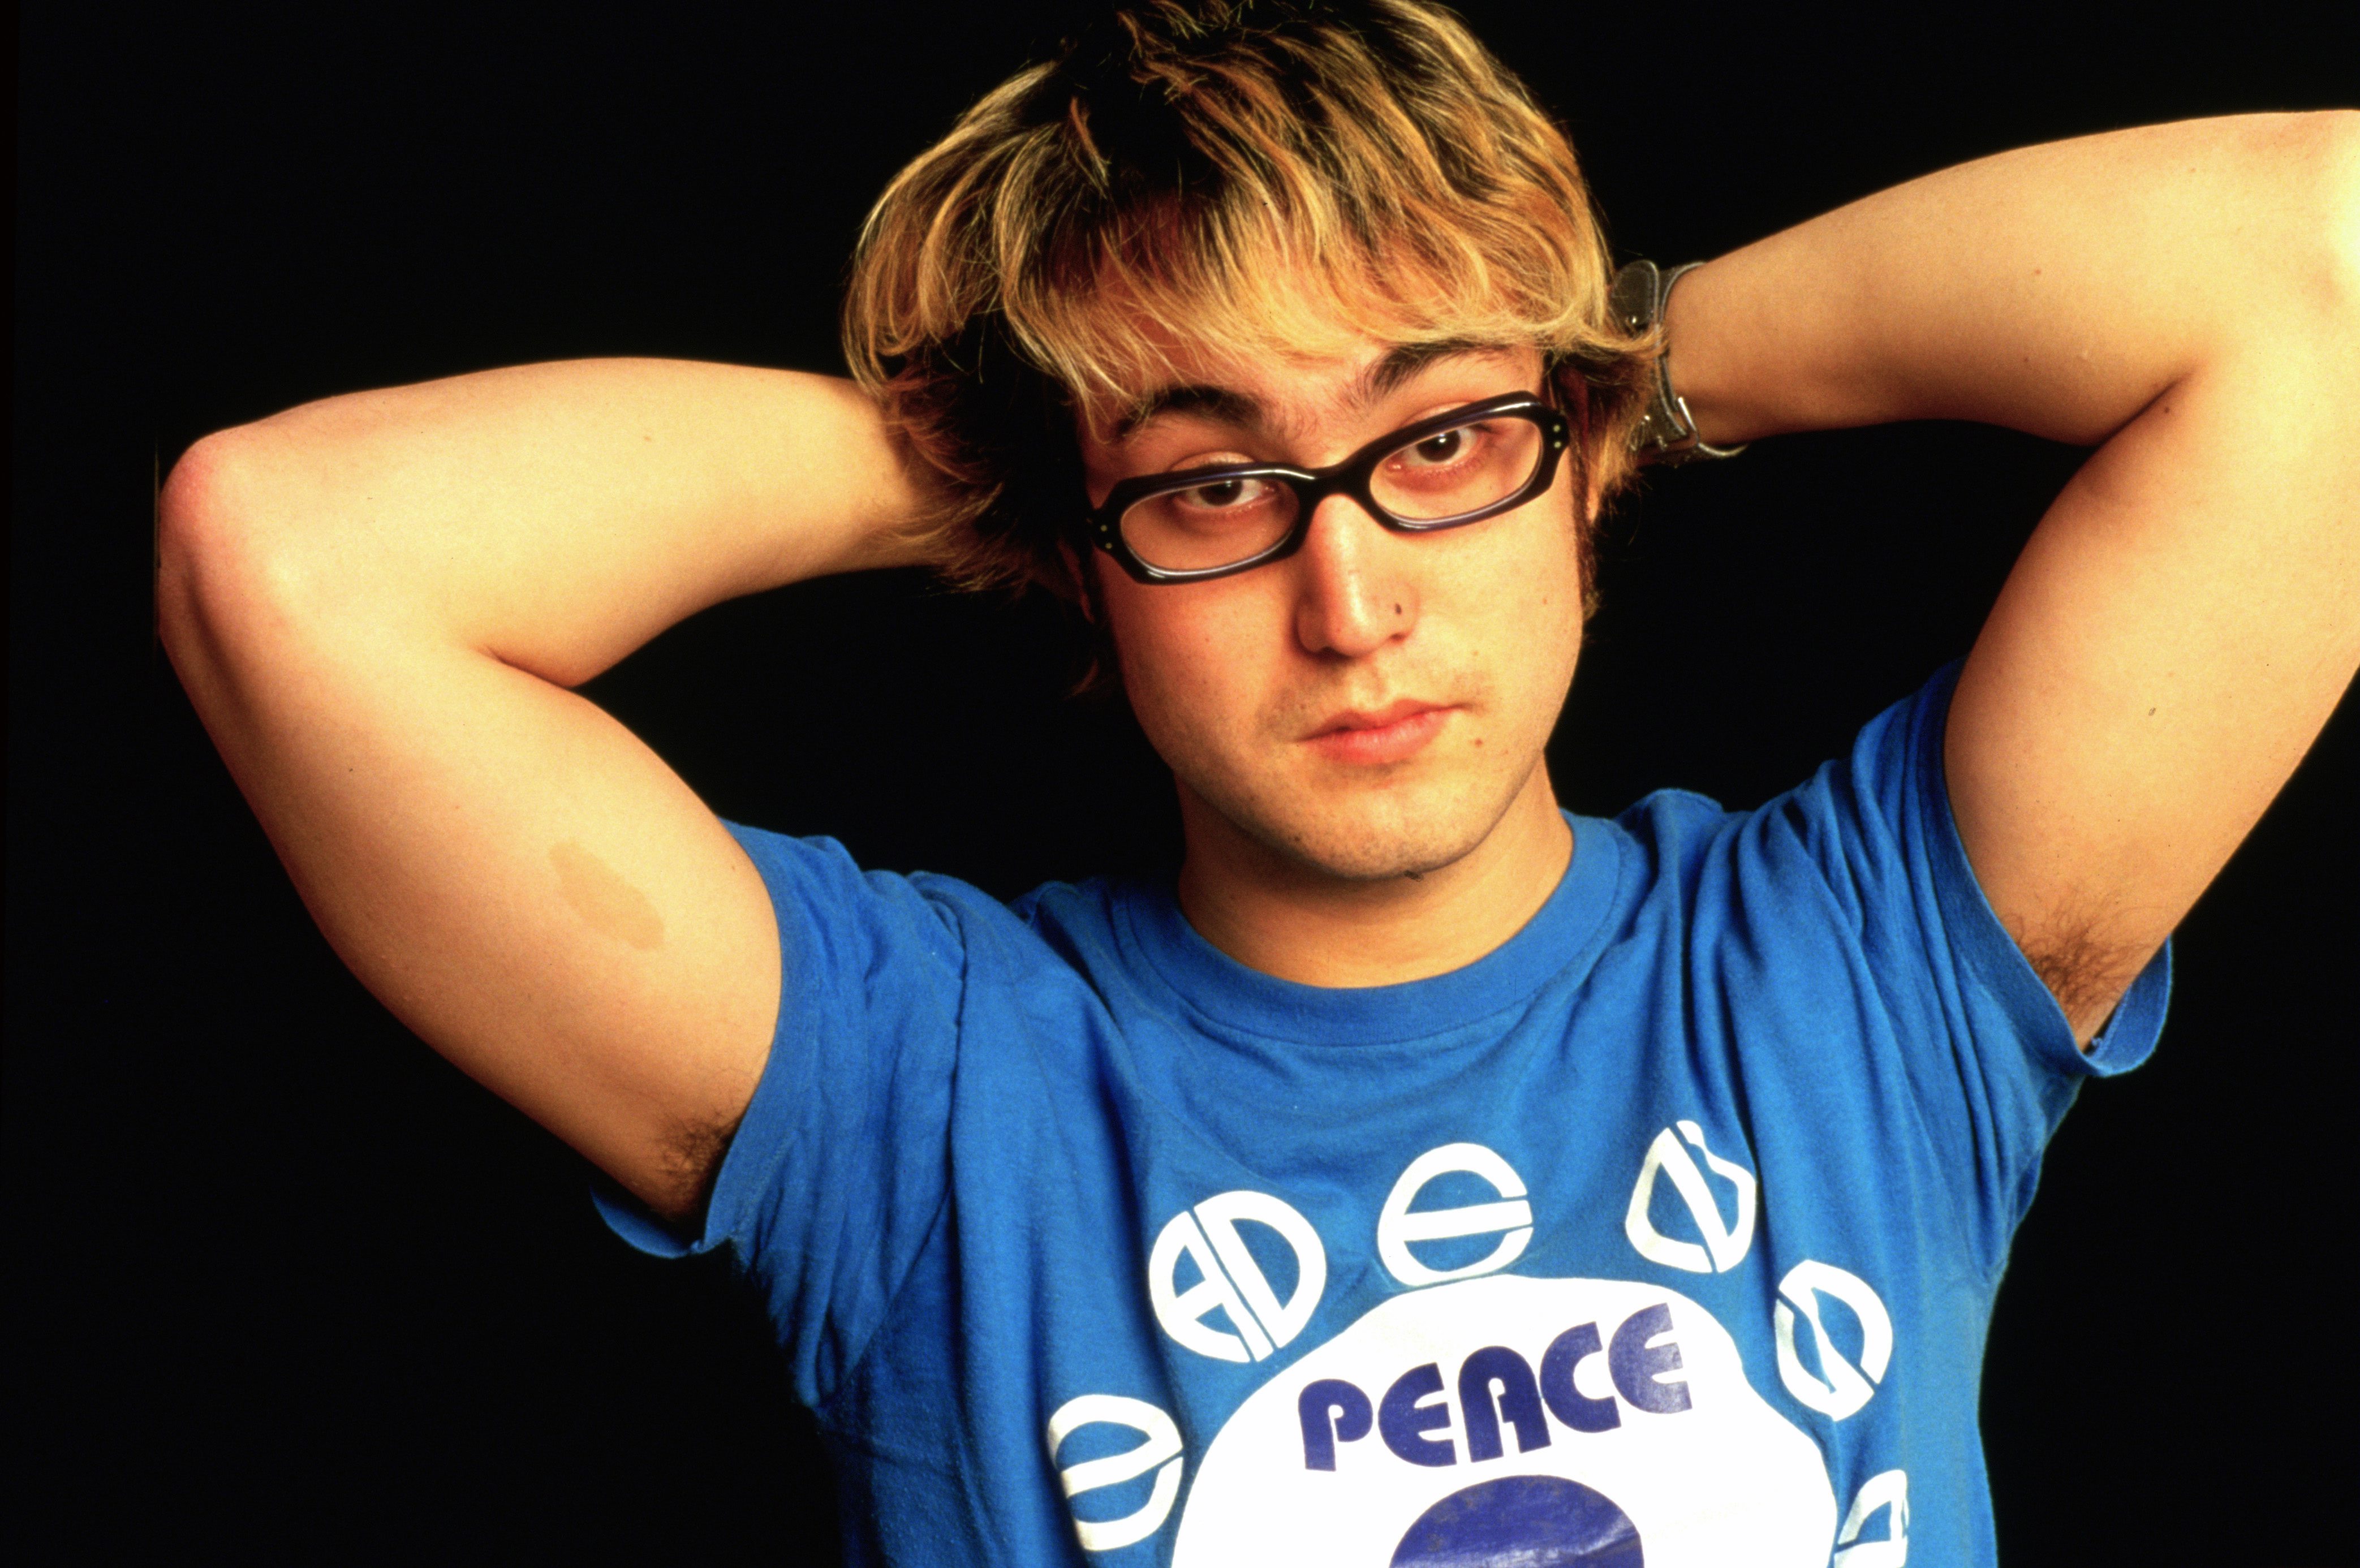 John Lennon's son, Sean Ono Lennon, wearing glasses and a blue shirt